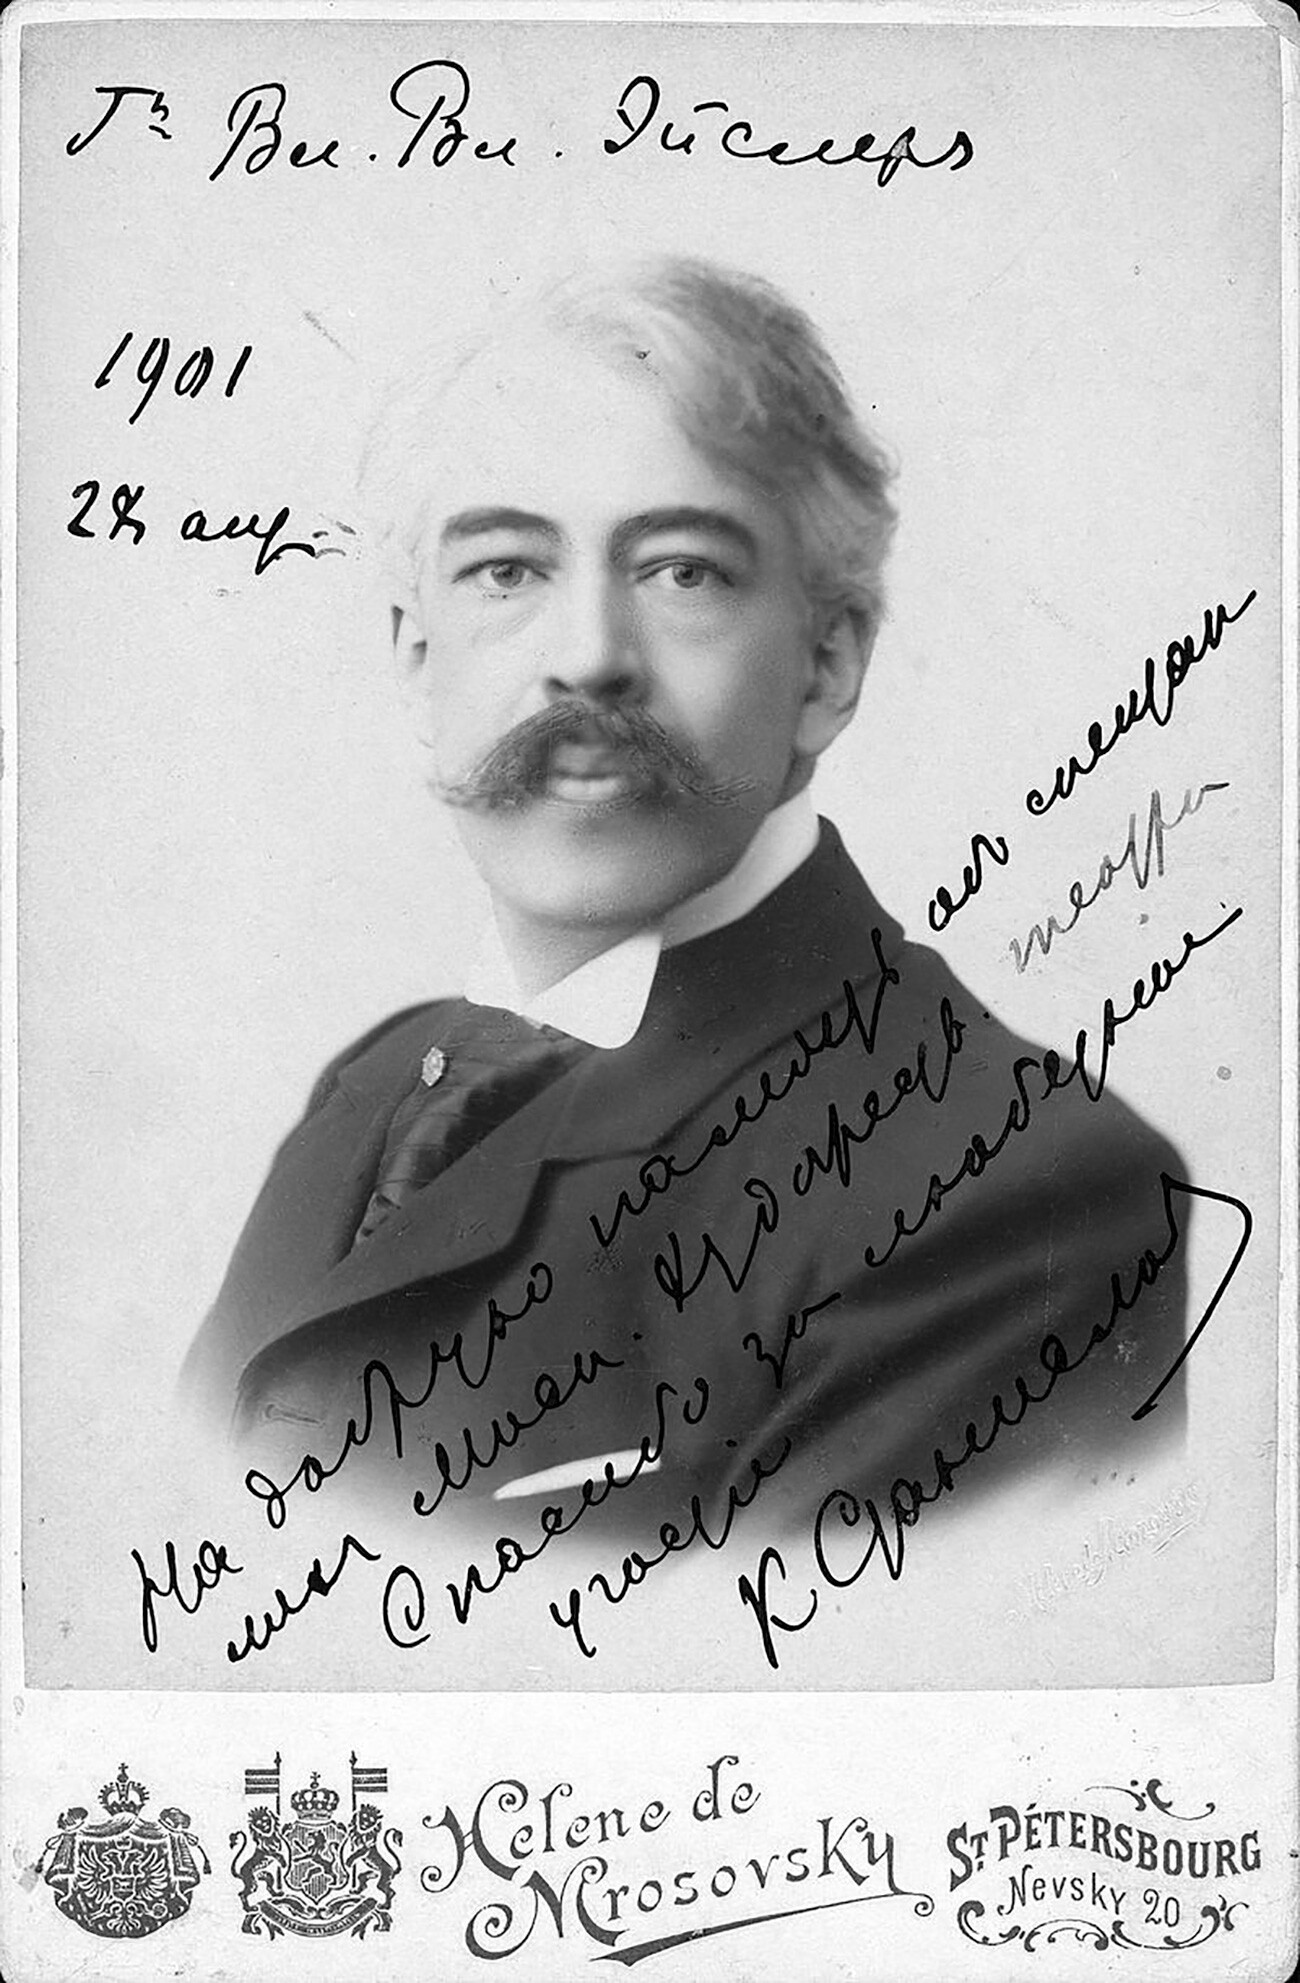 Theater director Konstantin Stanislavski